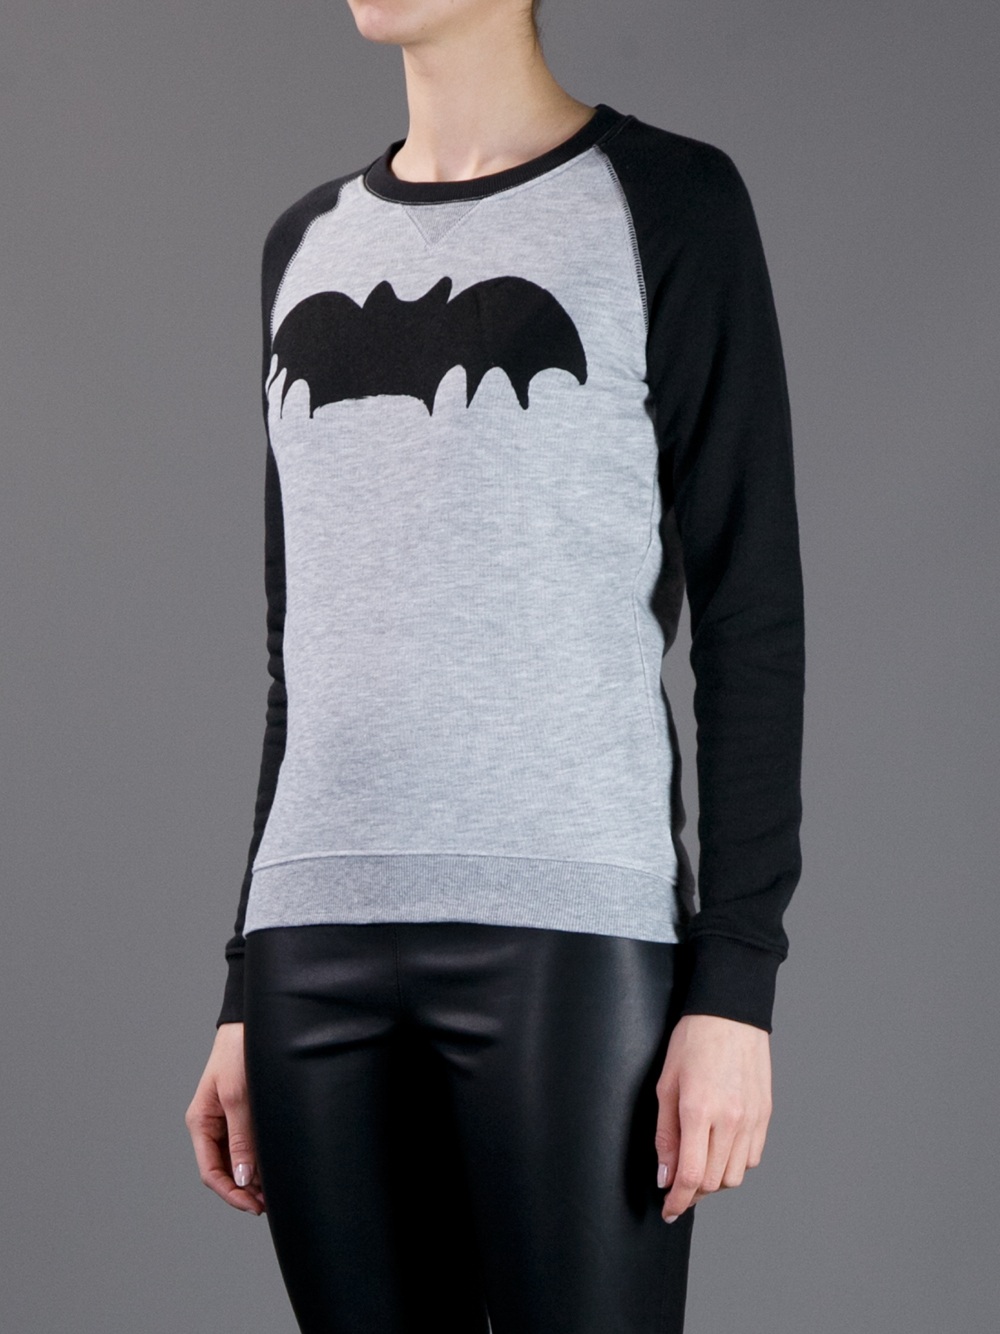 Zoe Karssen Bat Sweatshirt in Grey (Gray) - Lyst